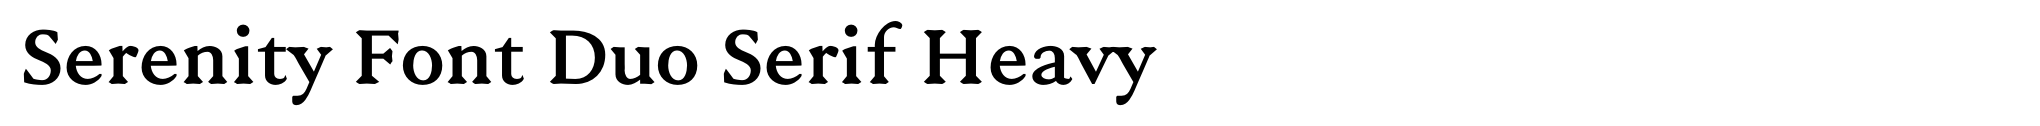 Serenity Font Duo Serif Heavy image